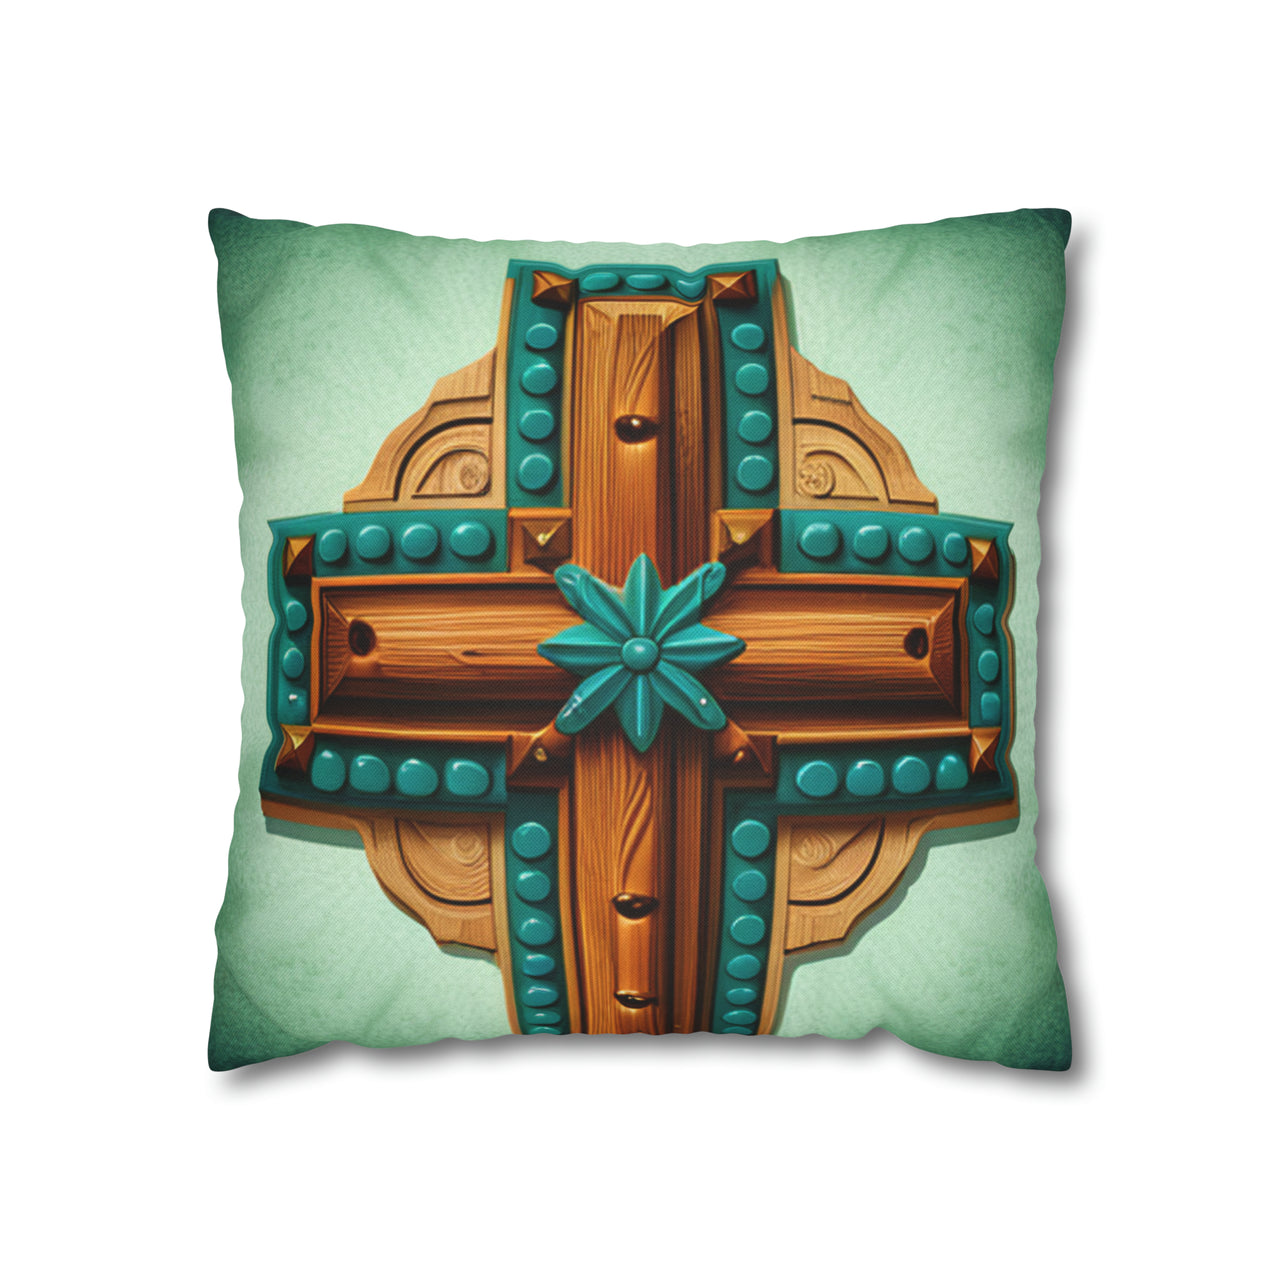 Studded Cross Pillow Cover